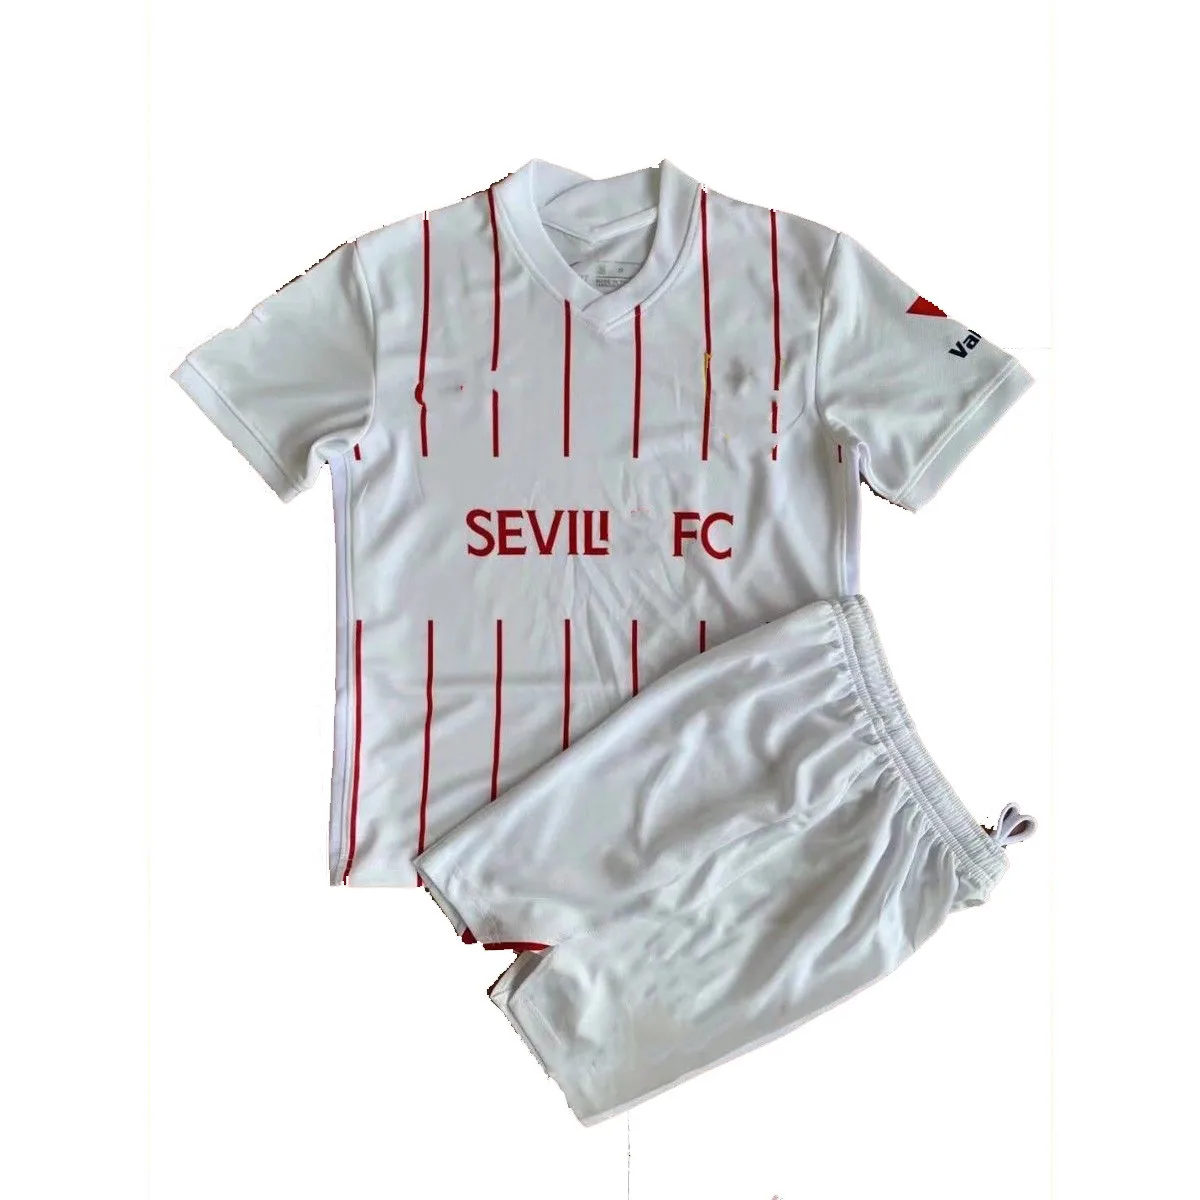 

2022 Maillot Sevilla21-22 fc Home and away soccer jerseys EVER BANEGA EN-NESYRI NAVAS Adults and kids custom football shirts